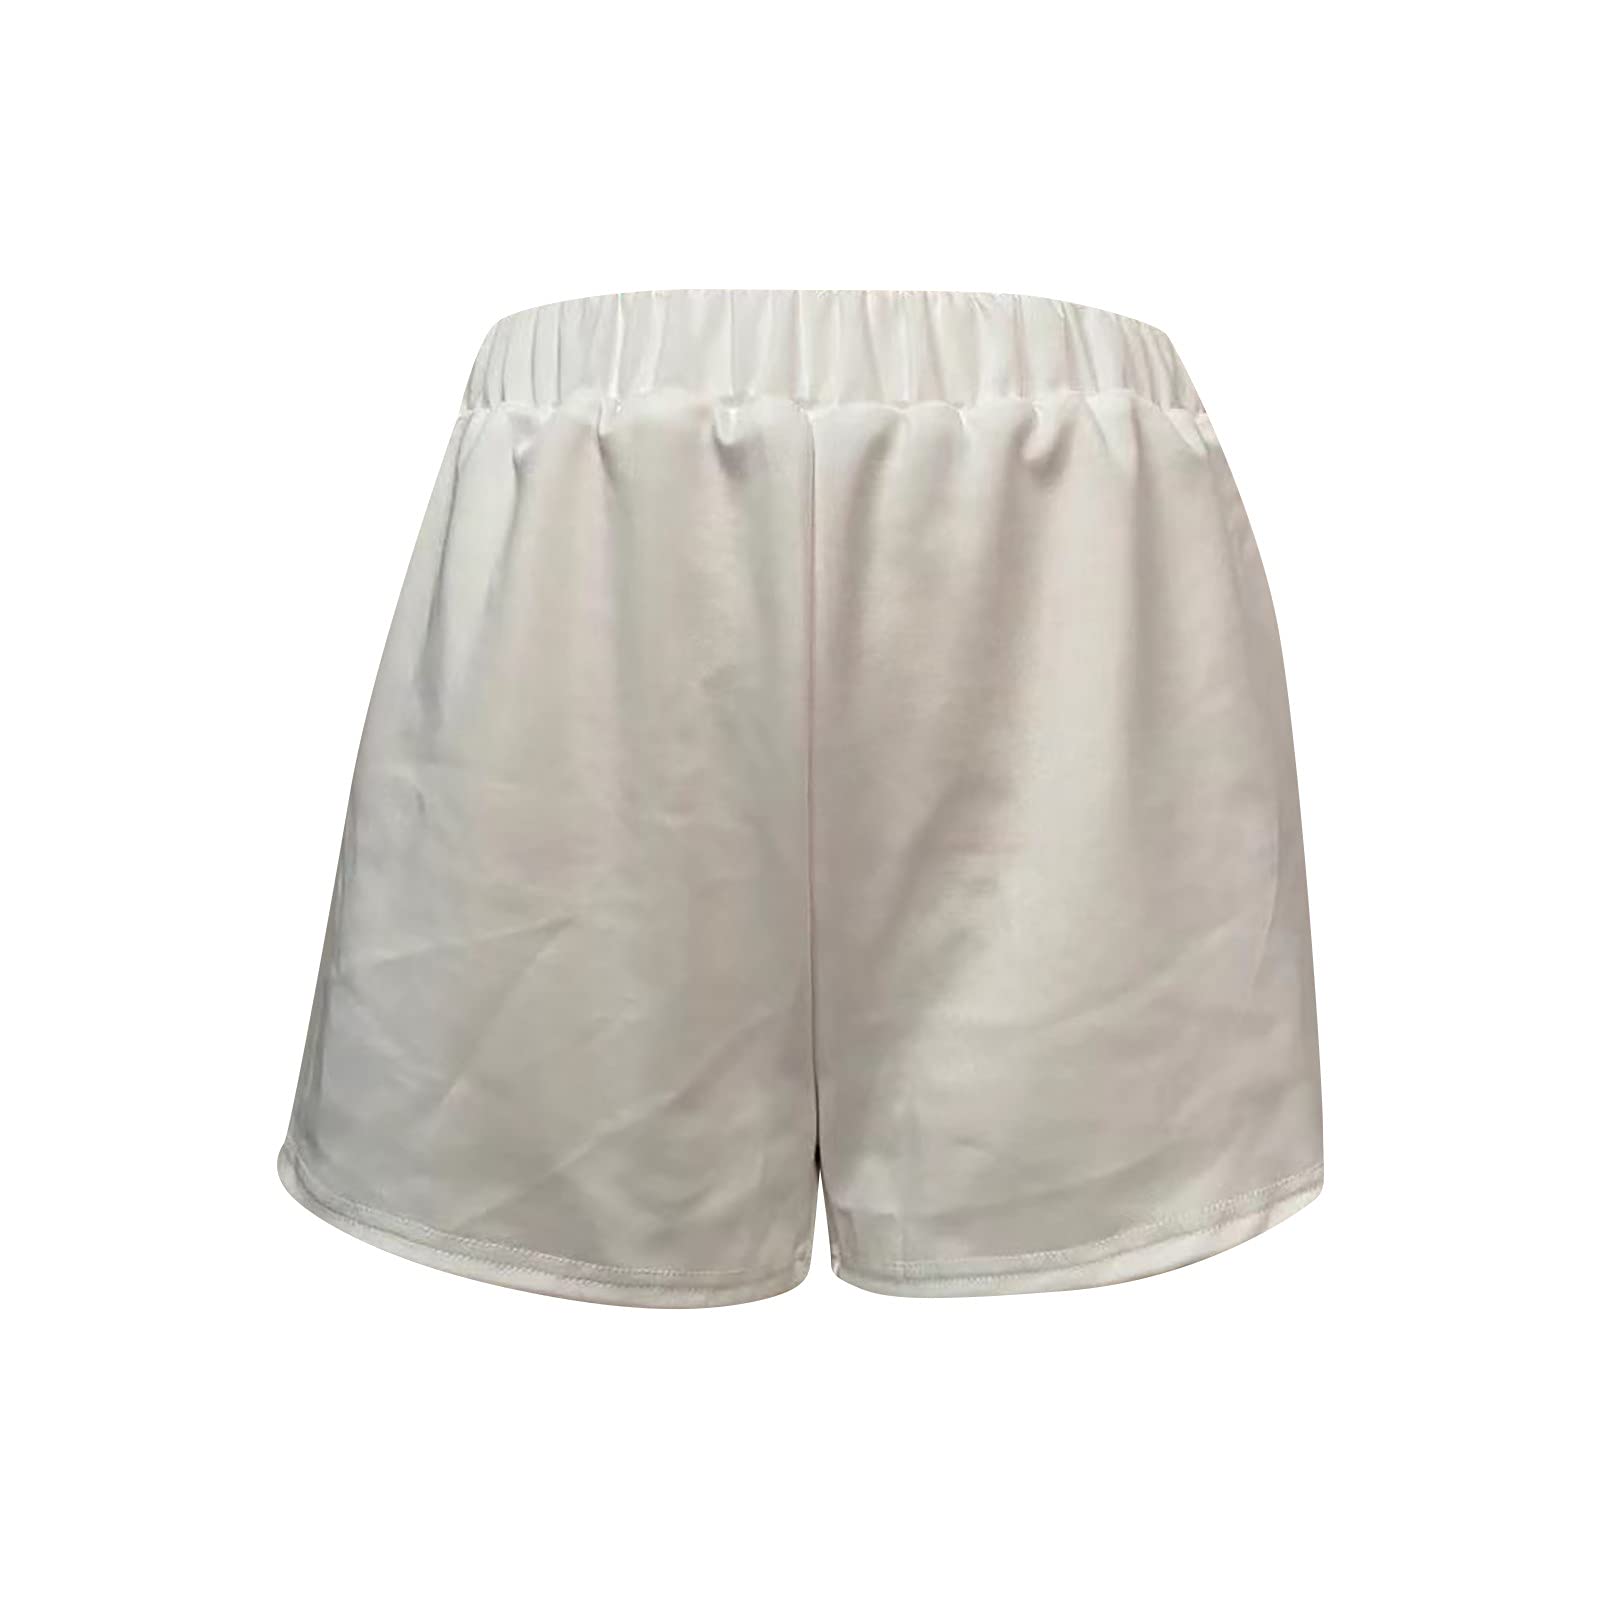 Bravetoshop Women's Lounge Shorts with Pockets Athletic Running Shorts Elastic Waist Comfy Workout Yoga Beach Shorts (White,S)